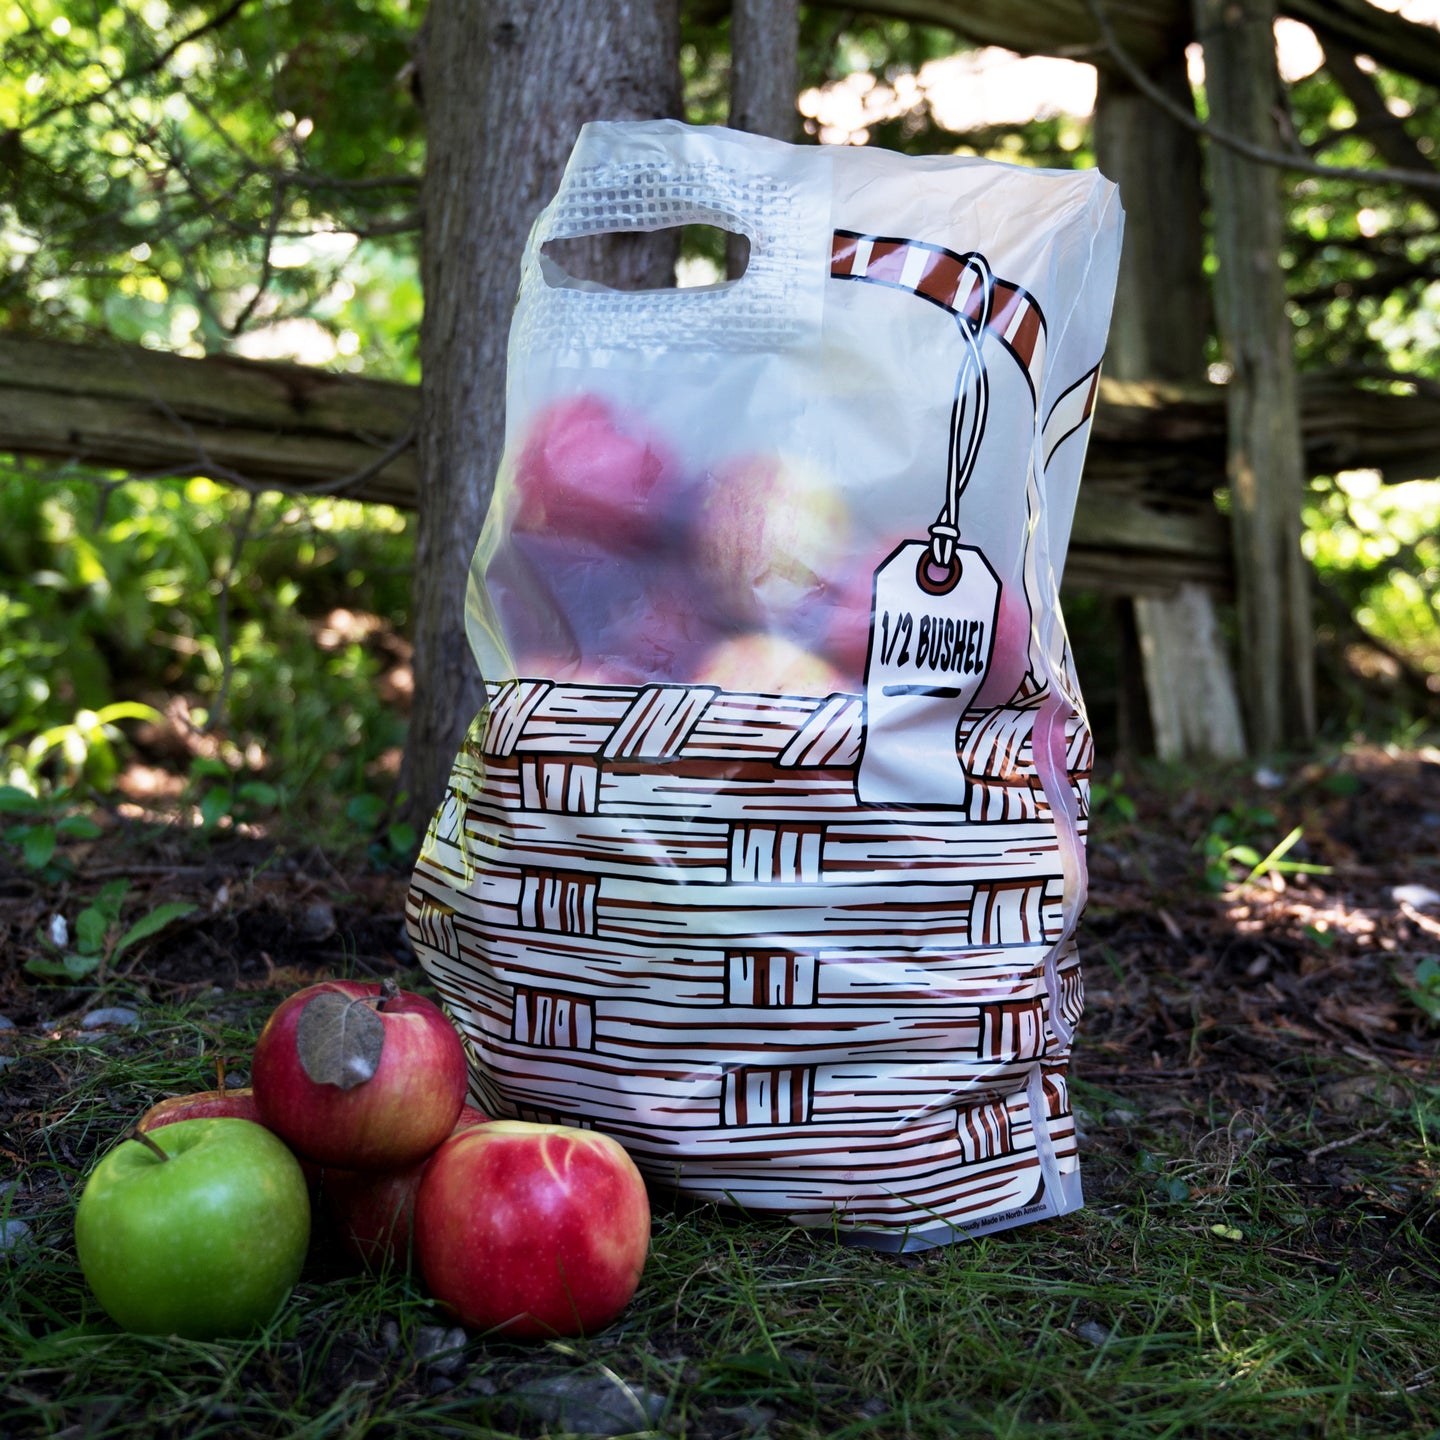 Apple Bag Pick Your Own Bag